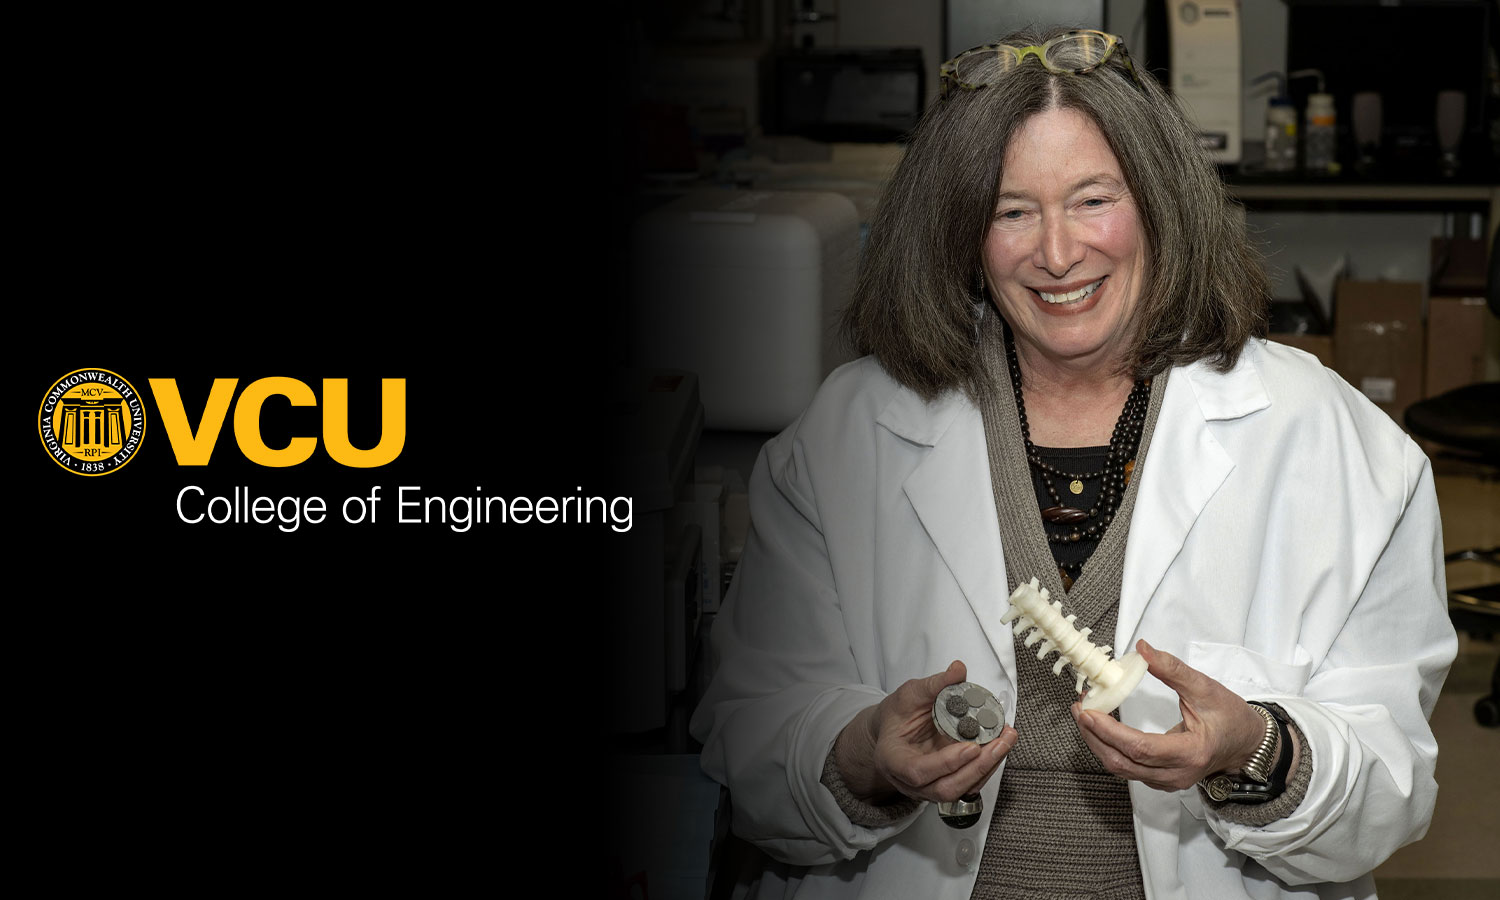 Barbara D. Boyan, Ph.D., dean of the VCU college of engineering